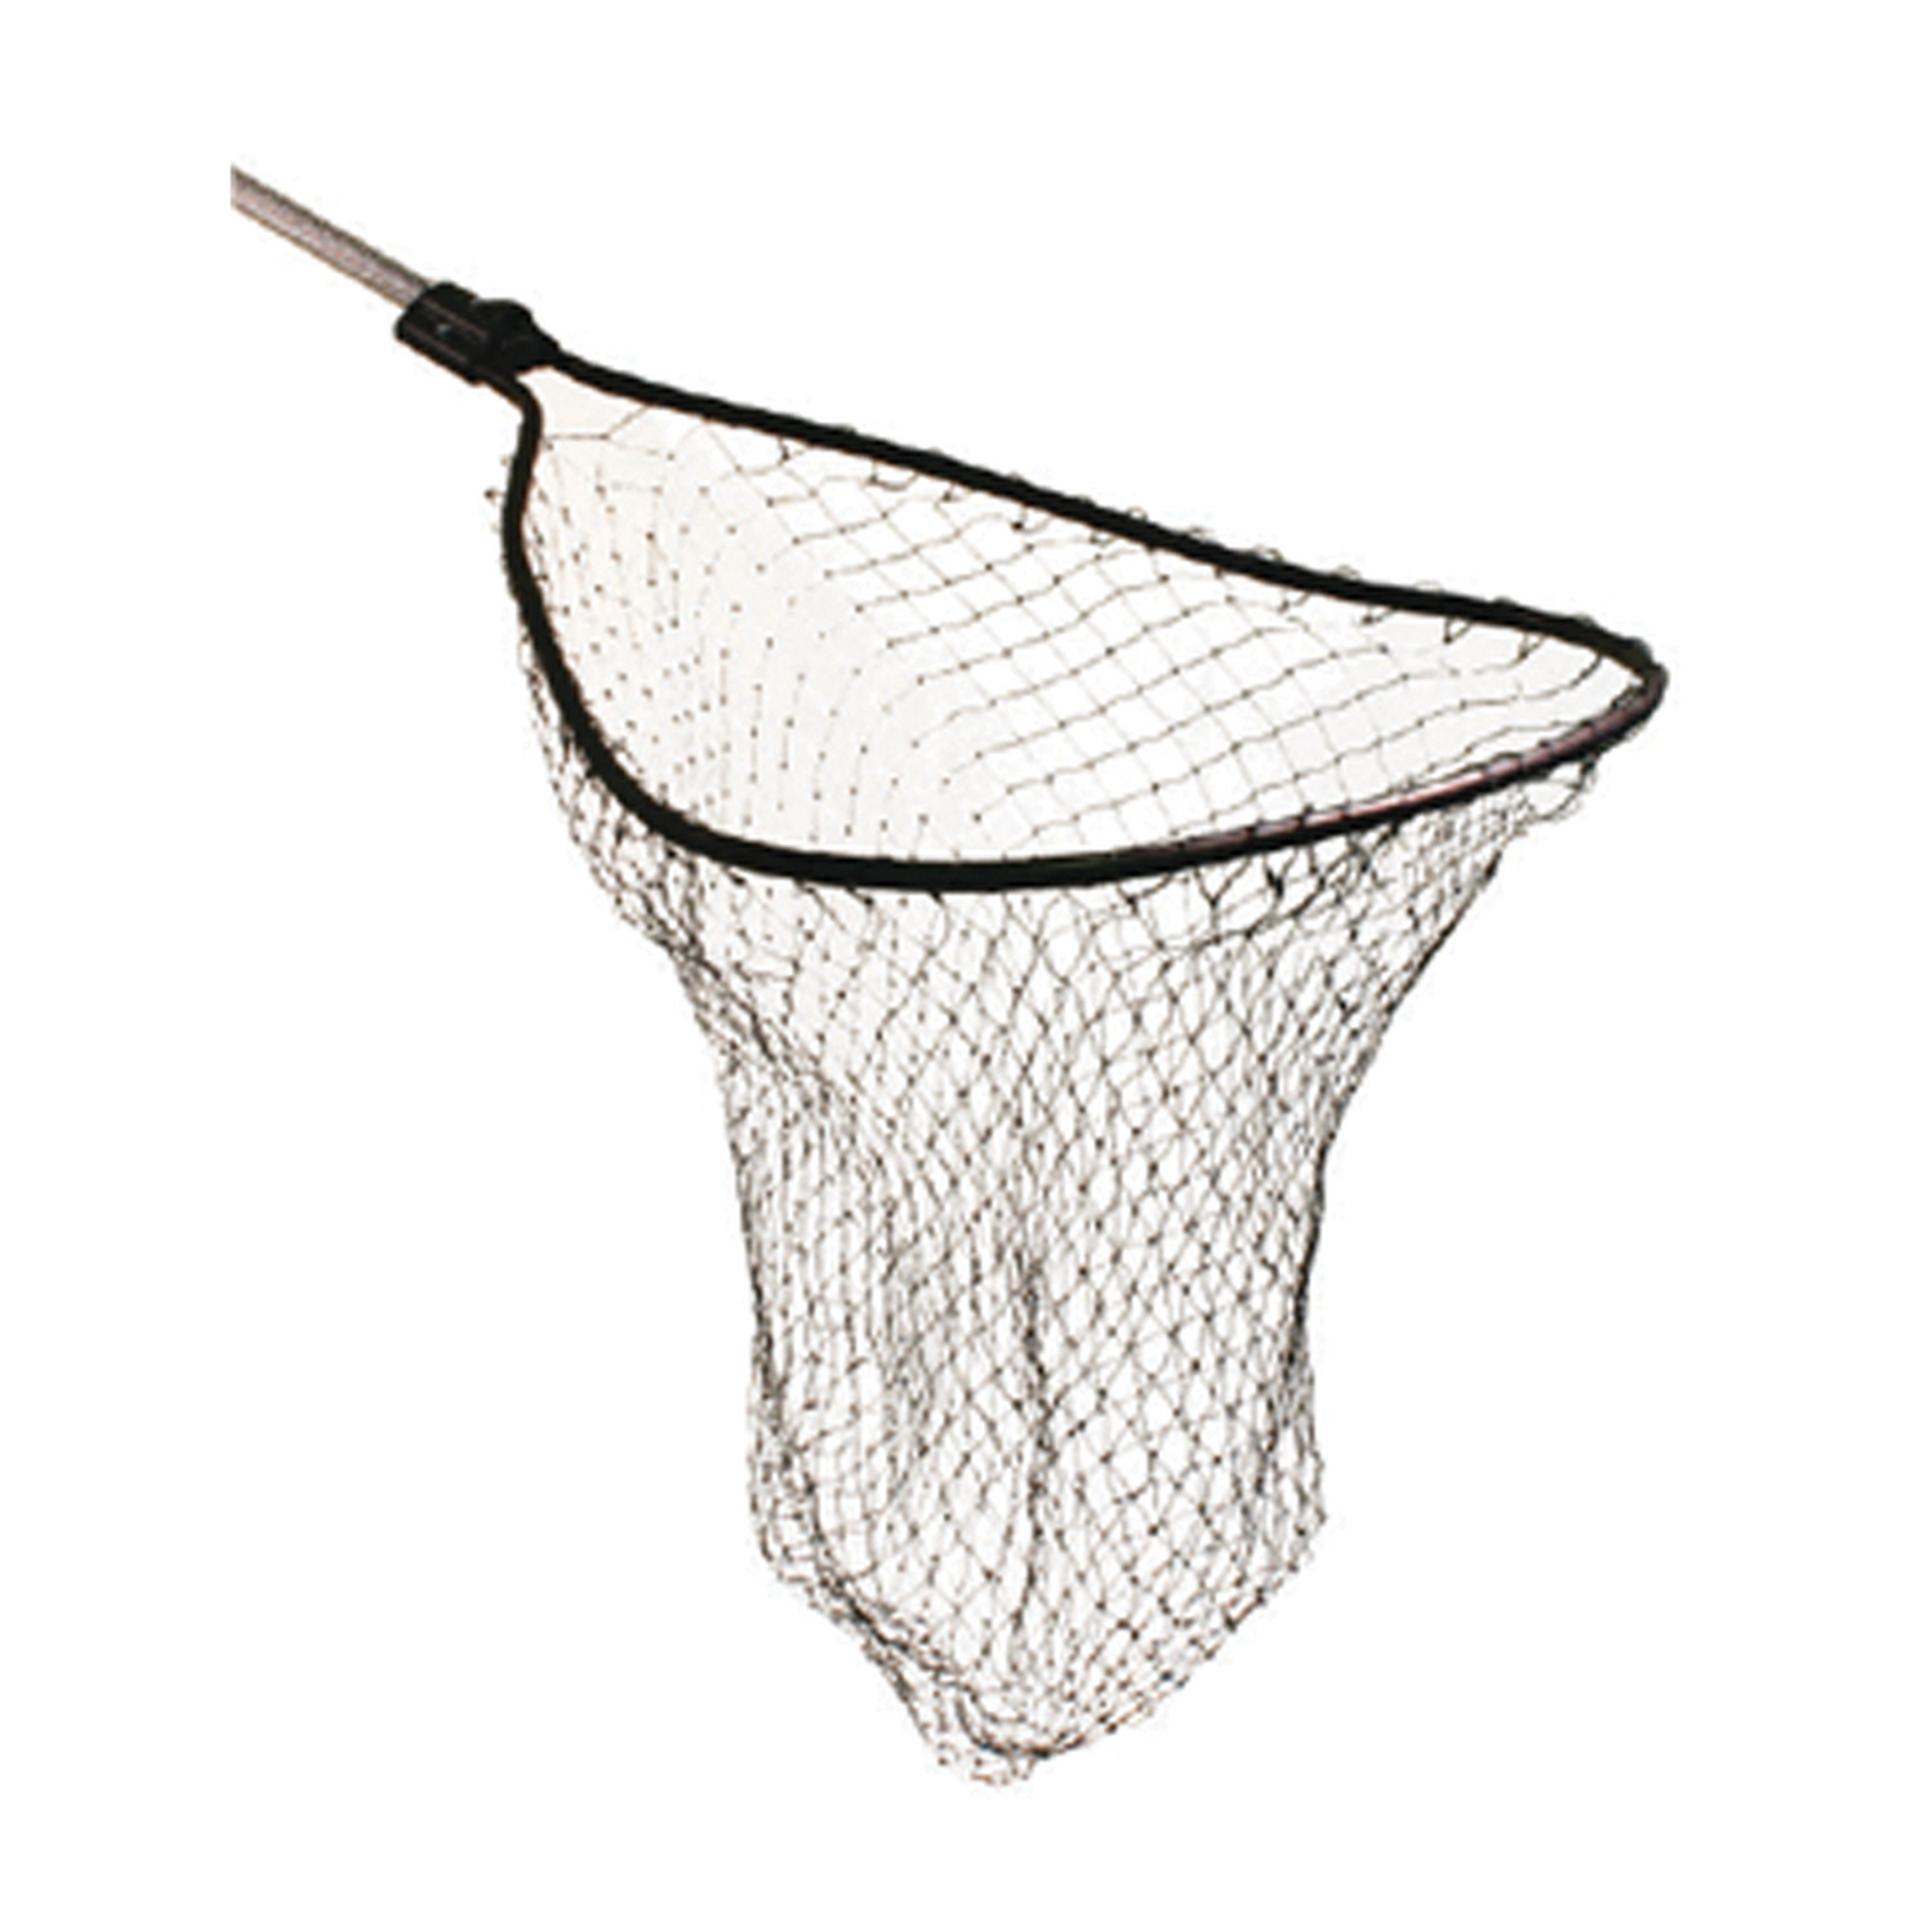 Smelt and Shad Dip Nets - Duluth Fish NetsDuluth Fish Nets